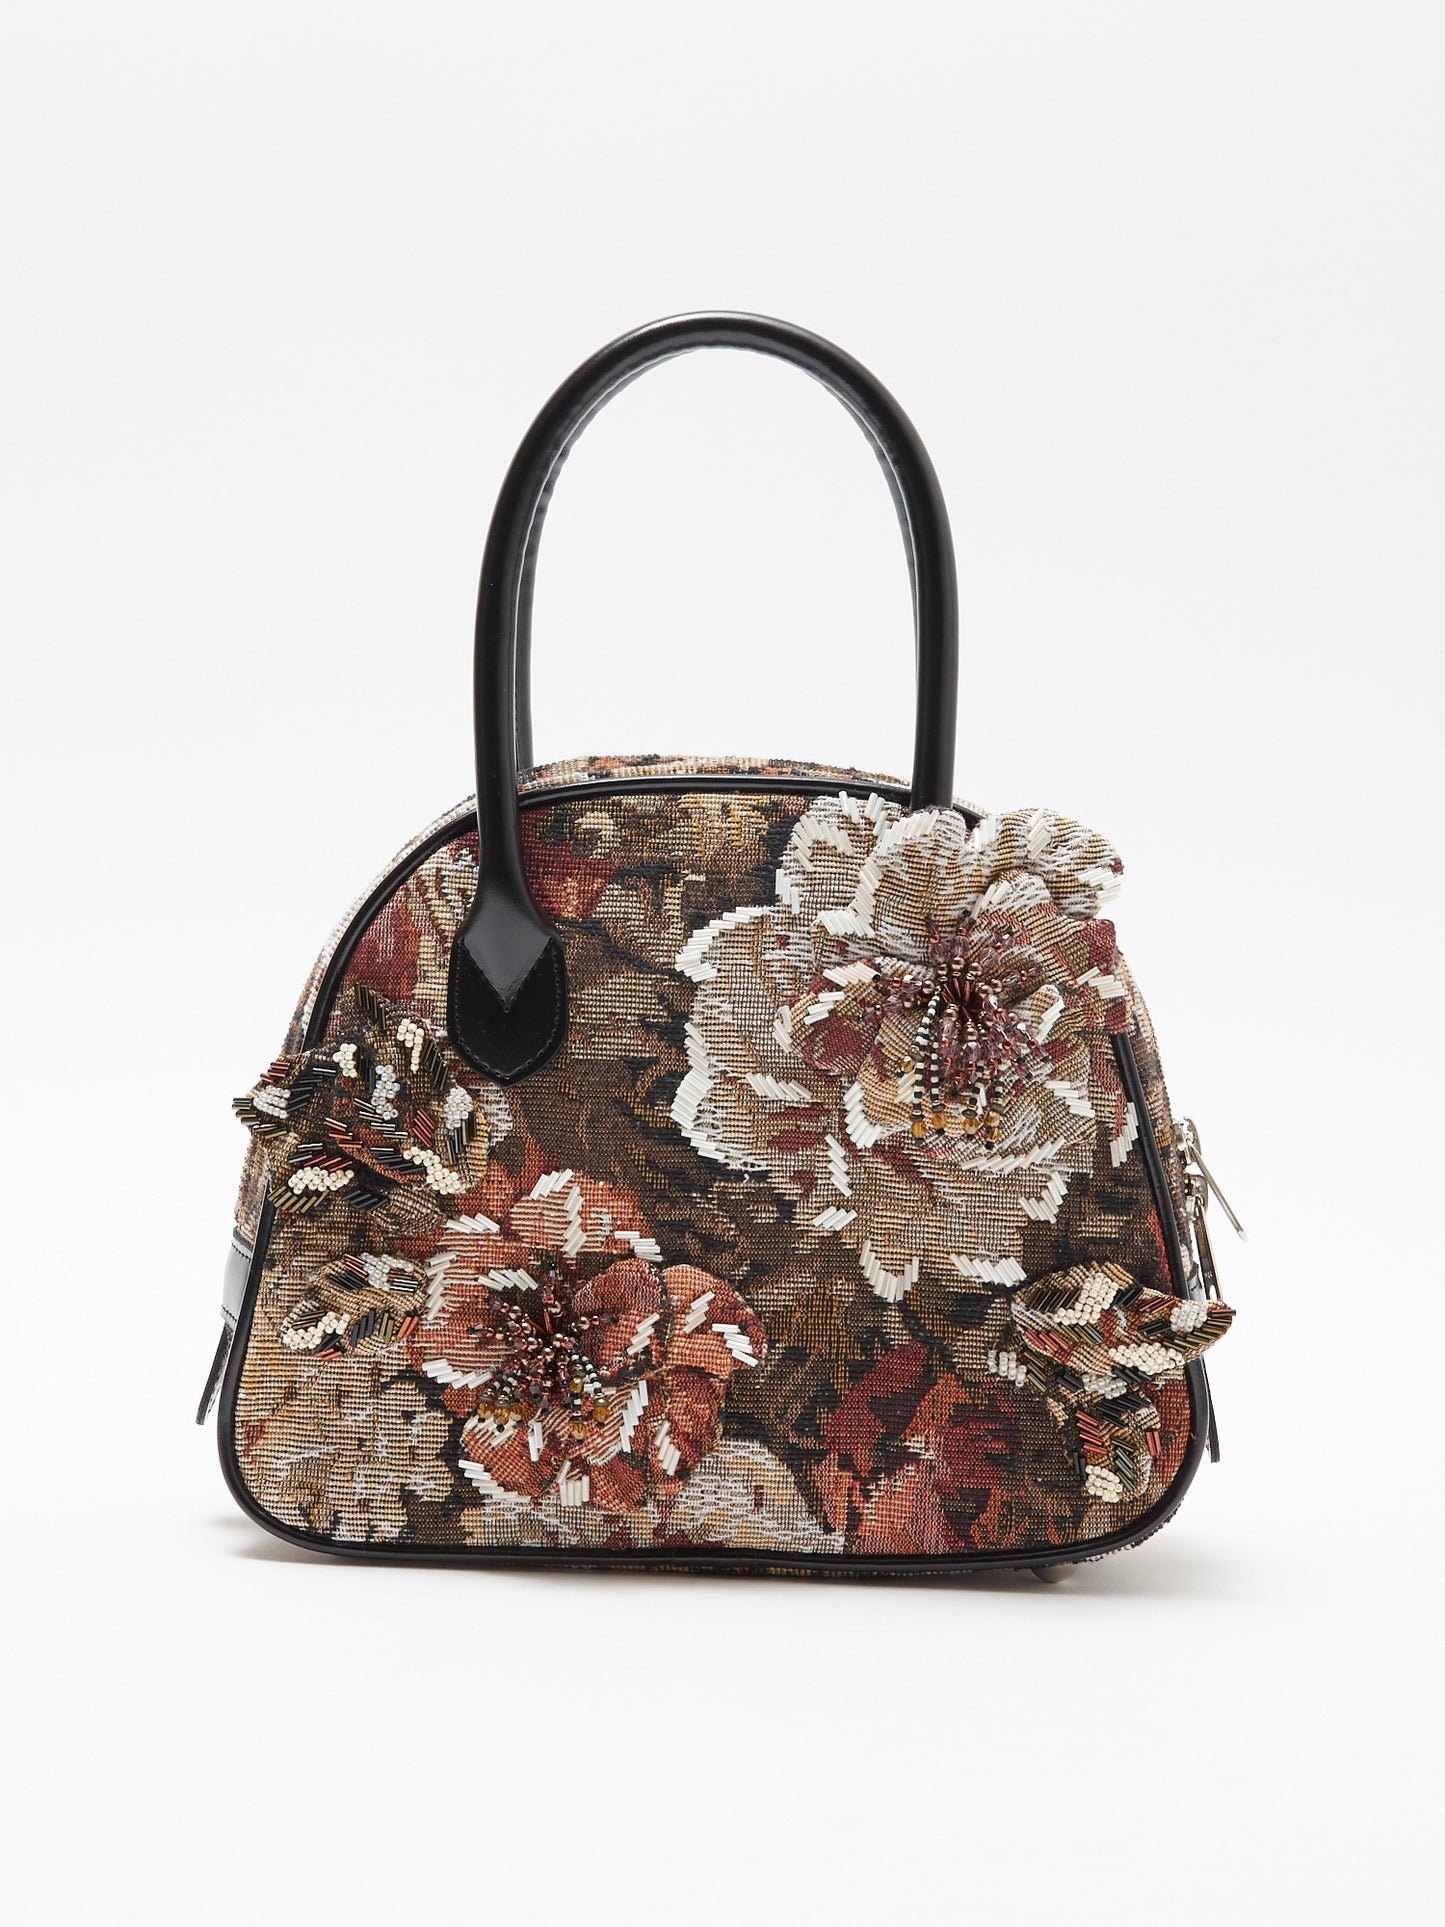 rose garden beads handbag【Stock】